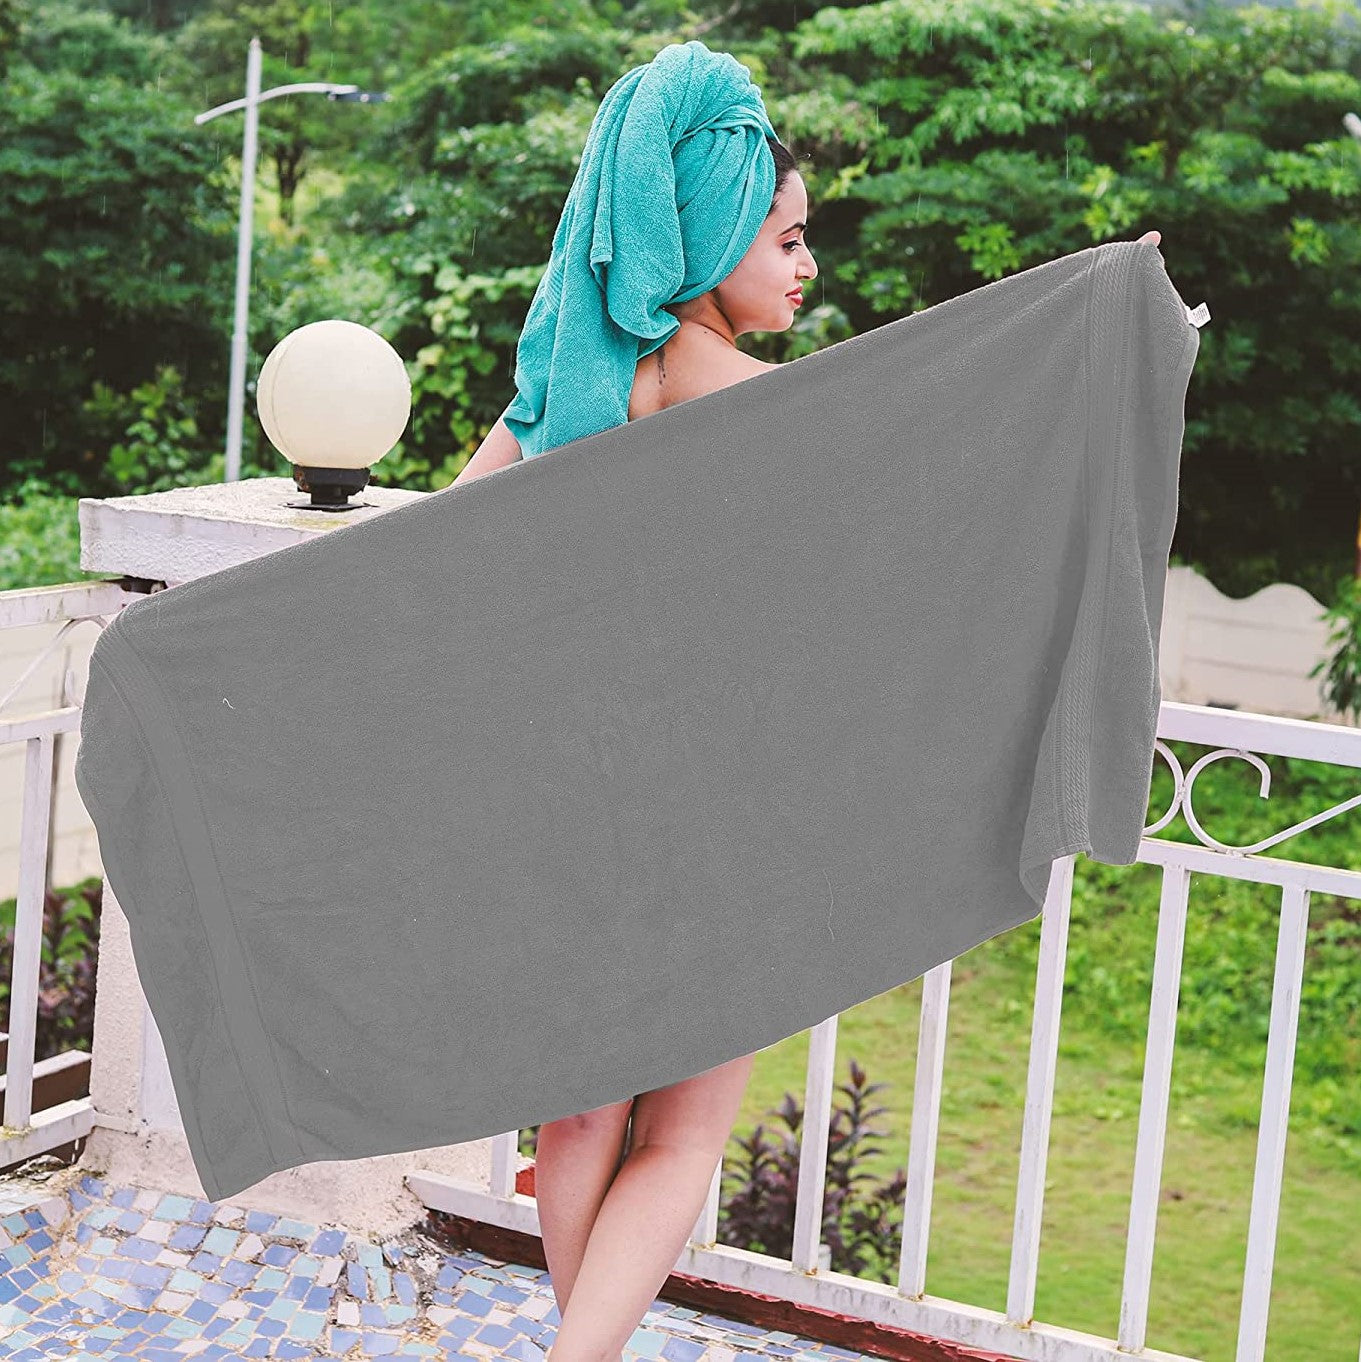 Toro Blu Toro Blu Large Size Face Towel 500 GSM for Men & Women,140x70cm (GREY) Toro Blu 499.00 Toro Blu  Toro Blu Large Size Face Towel 500 GSM for Men & Women,140x70cm (GREY)